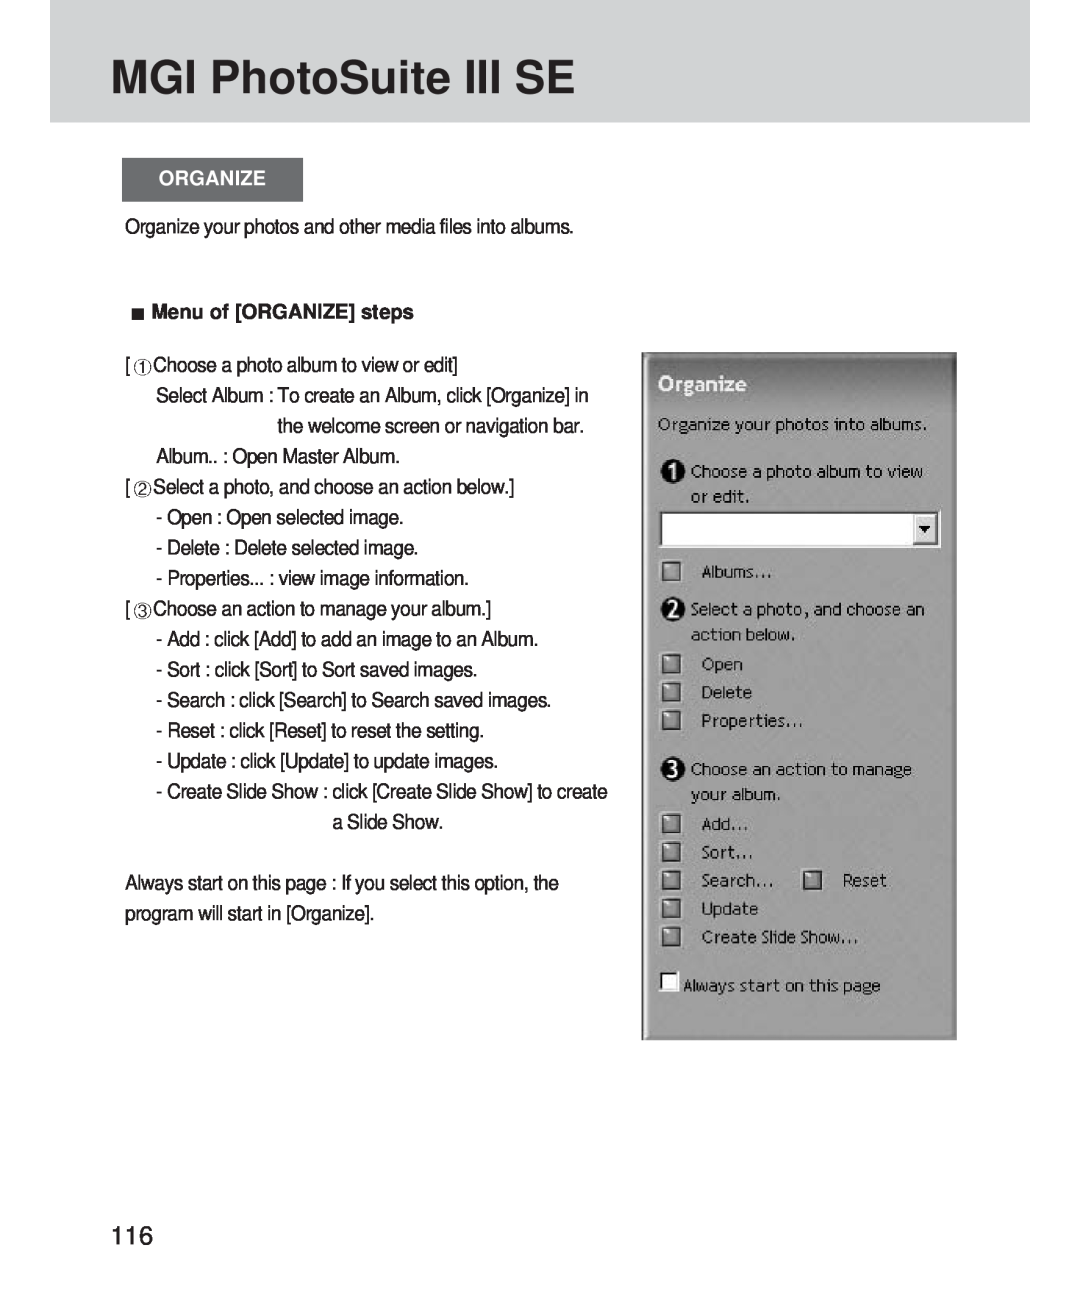 Samsung 420 manual MGI PhotoSuite III SE, Organize, Menu of ORGANIZE steps 